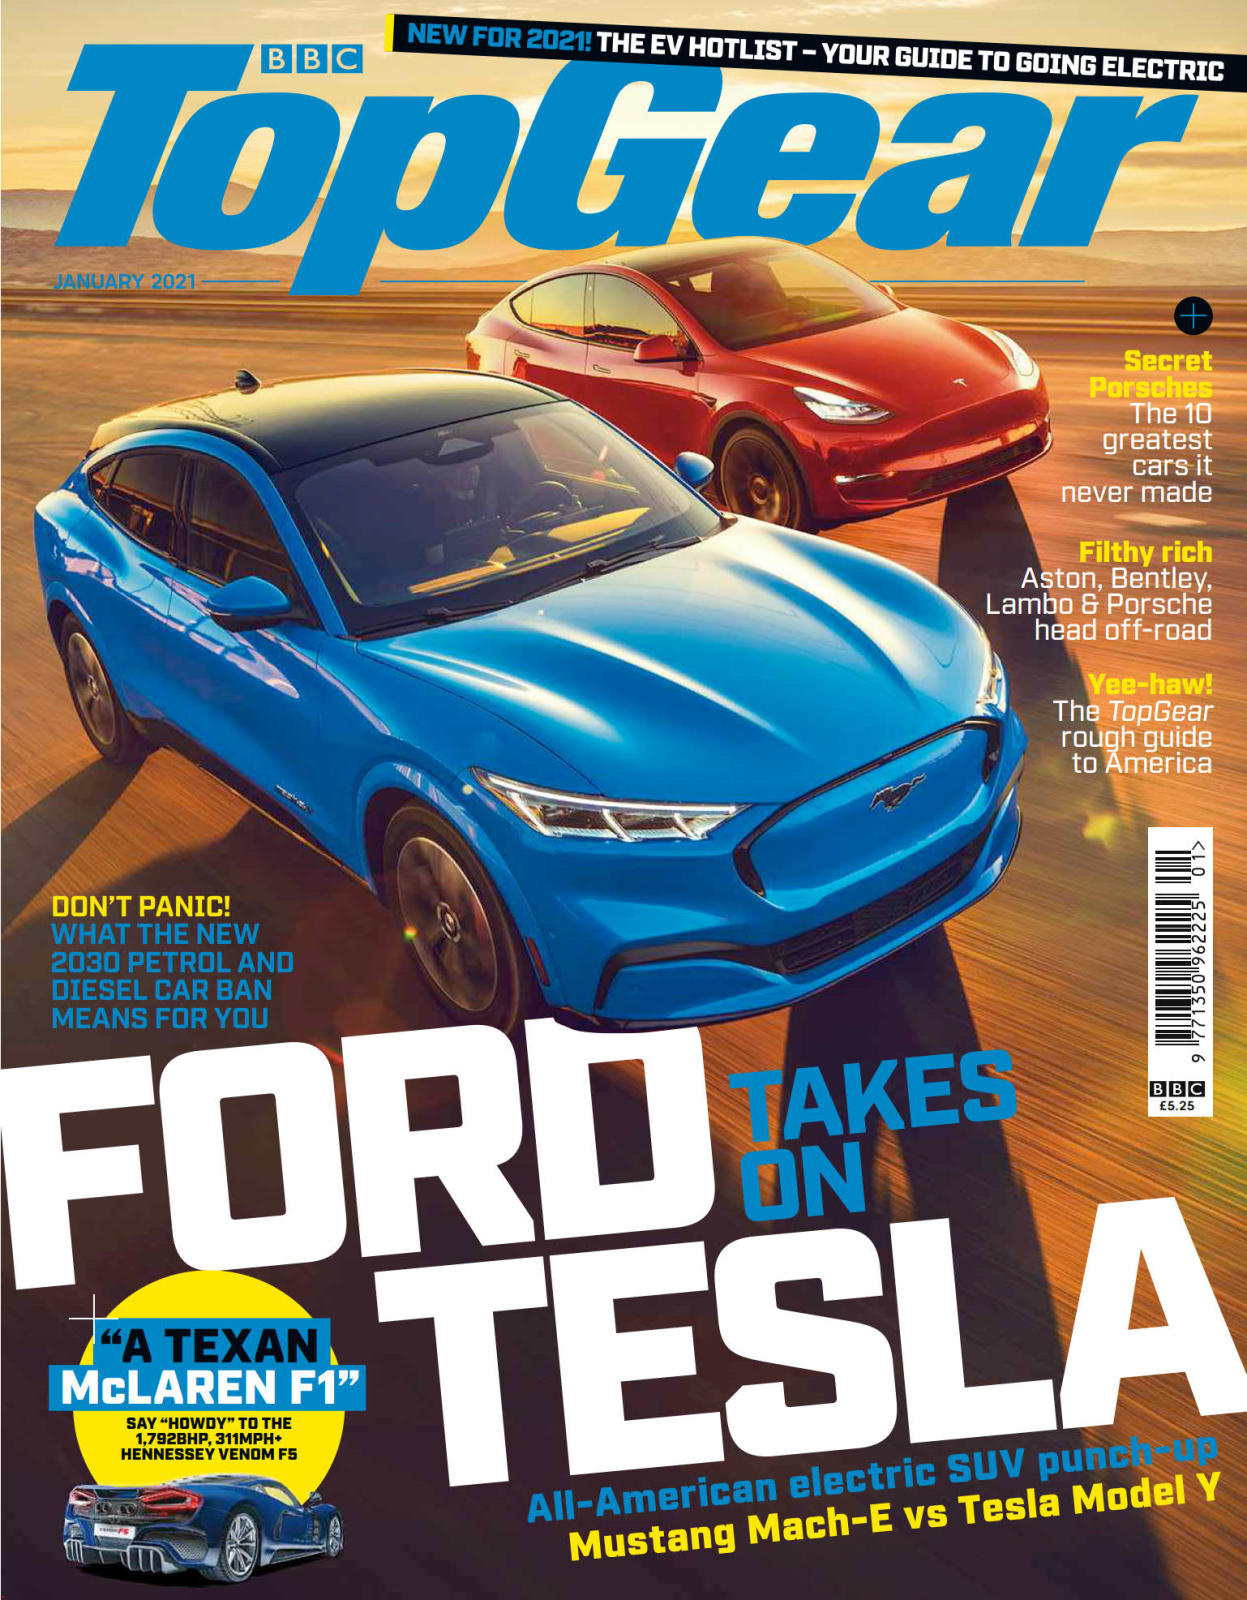 BBC Top Gear BBC疯狂汽车秀杂志 JANUARY 2021年1月刊